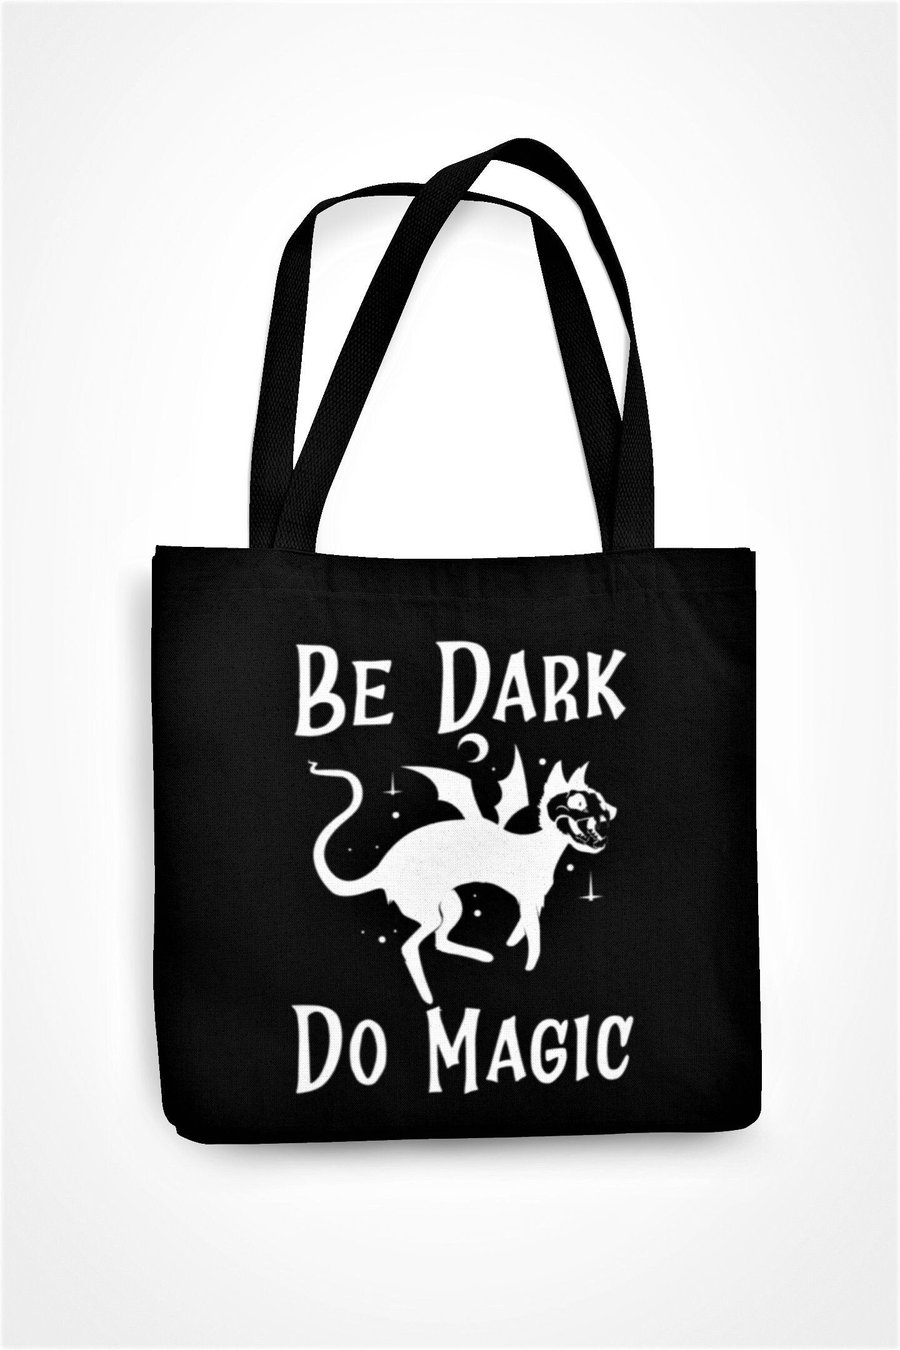 Be Dark Do Magic Tote Bag Gothic Halloween Witch Black Familiar Demon Cat